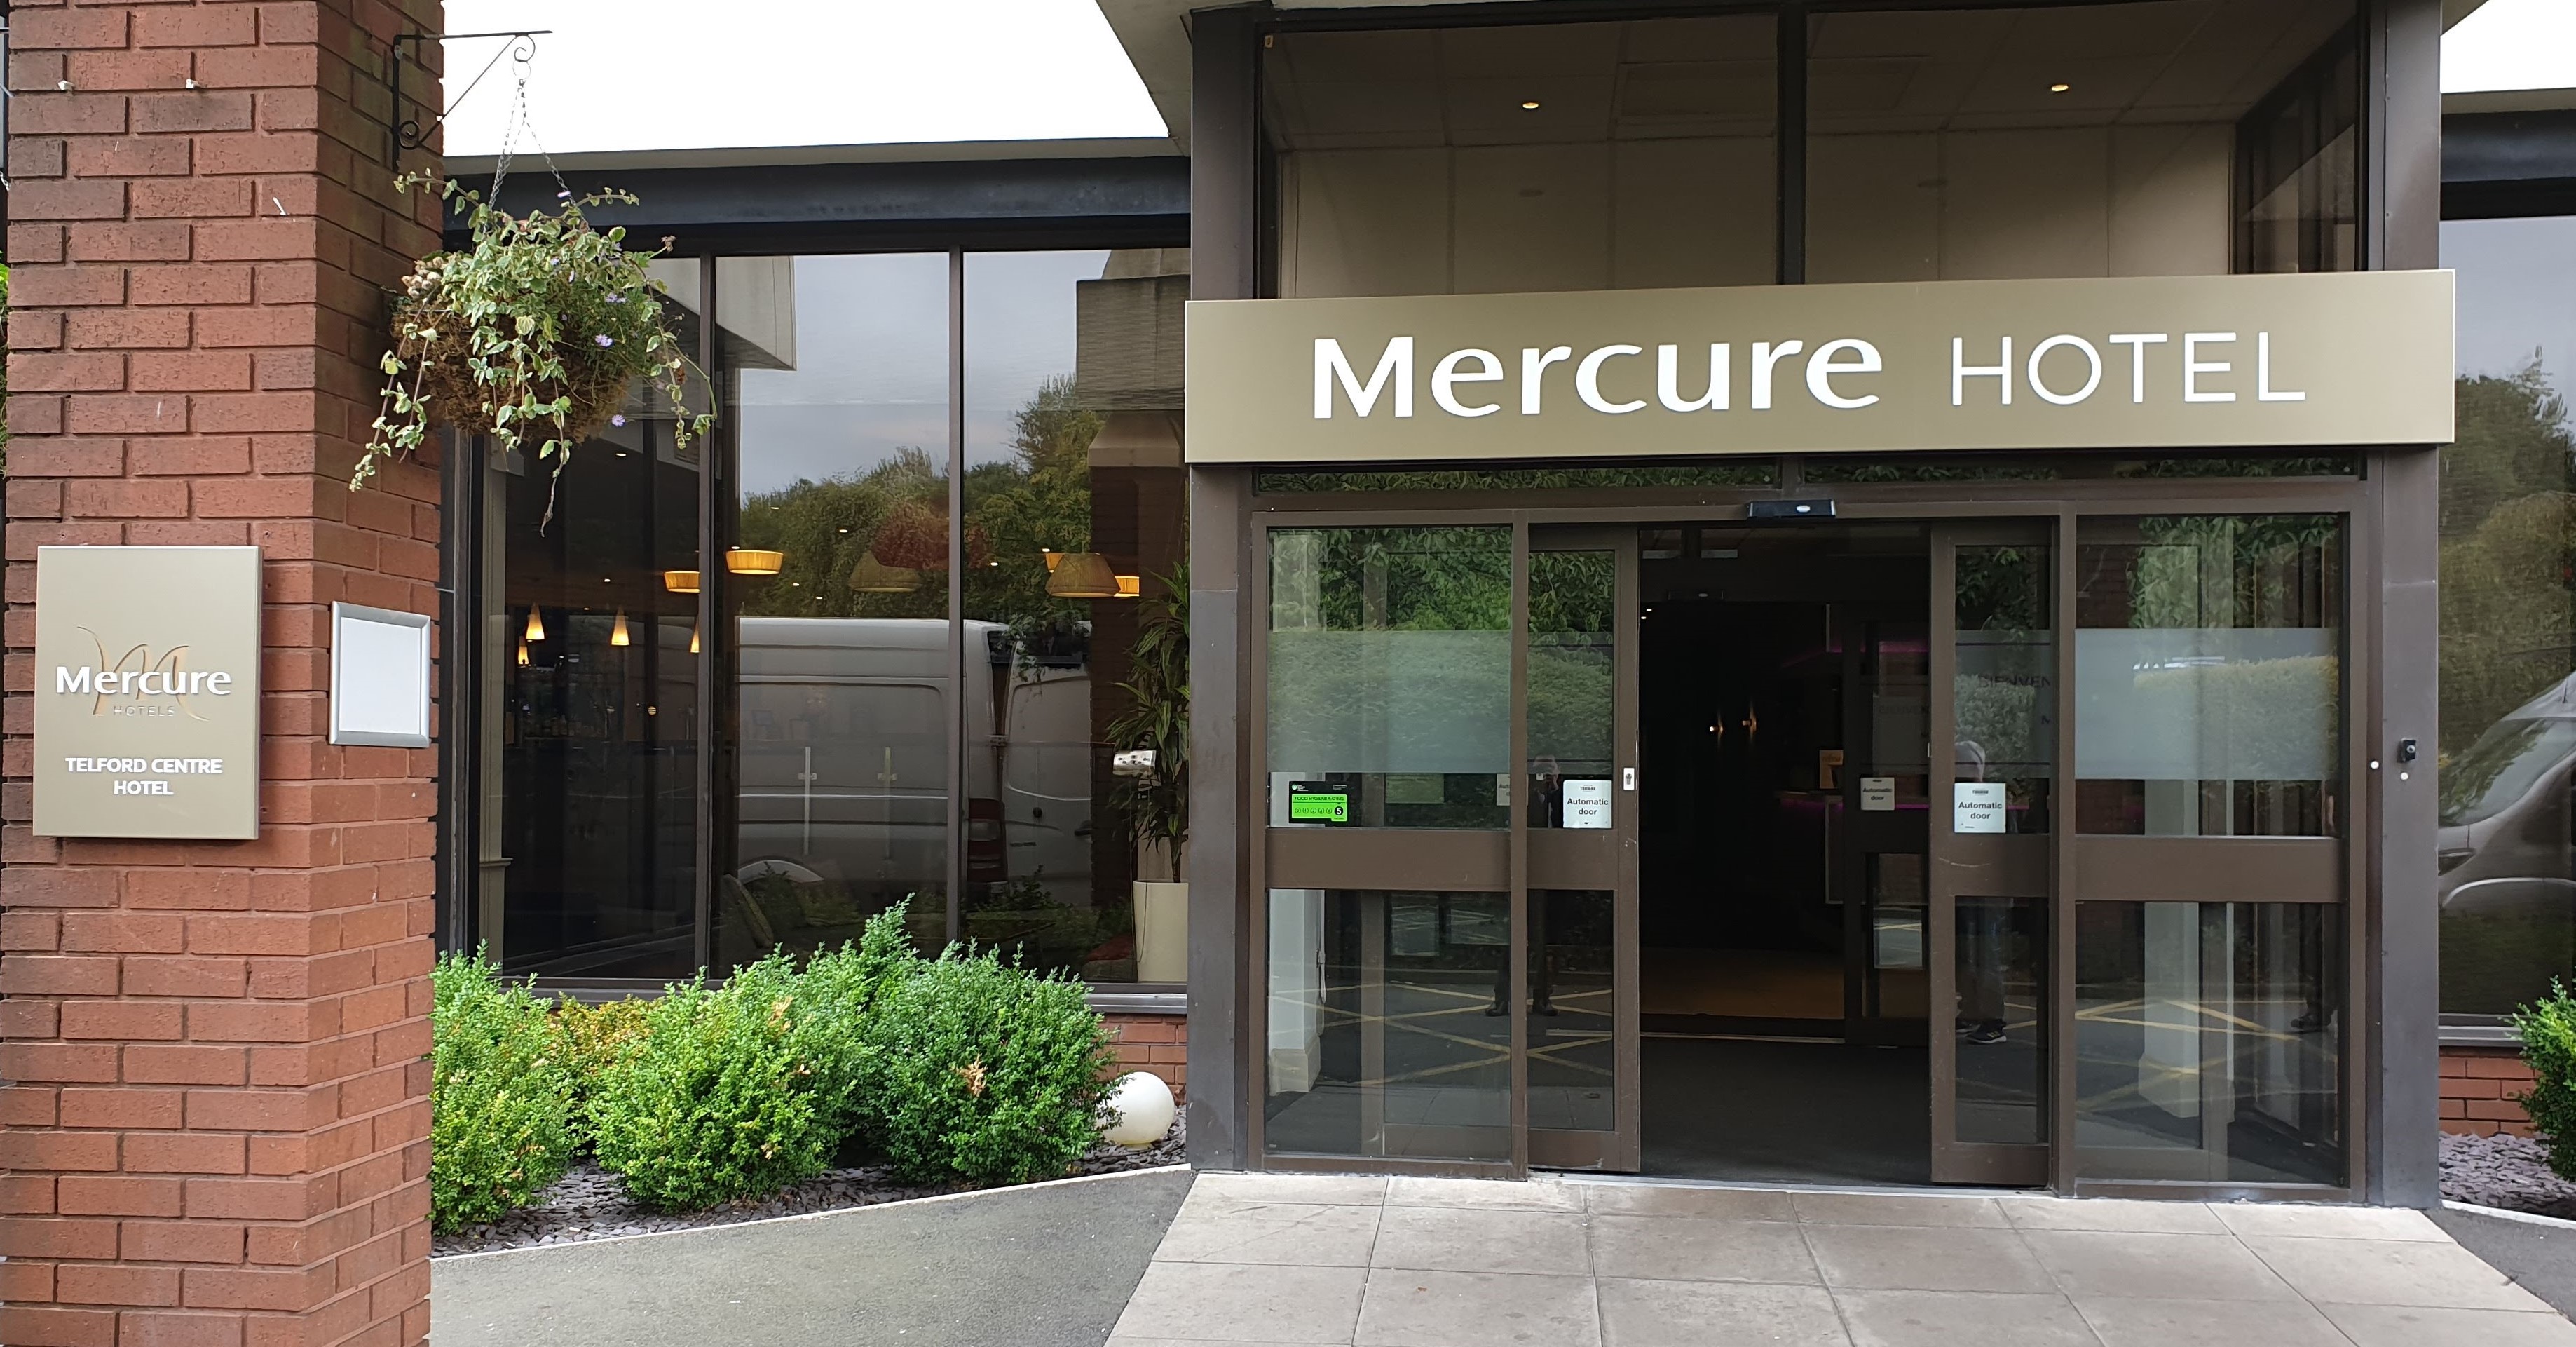 Mercure Telford Centre Hotel Telford 01952 217680